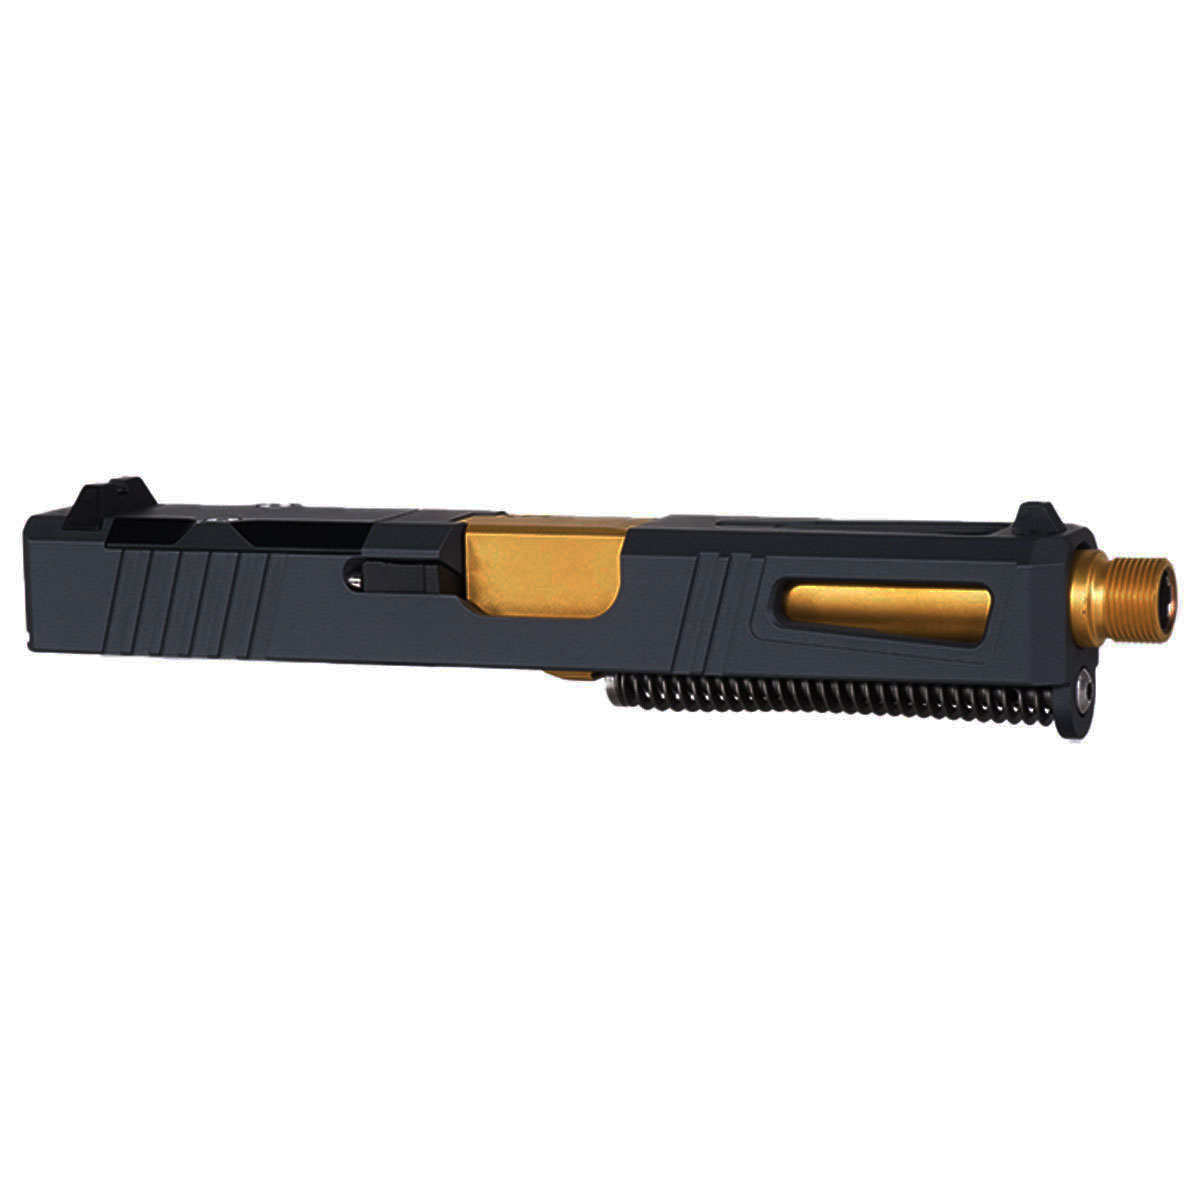 DTT 'Hermes' 9mm Complete Slide Kit - Glock 19 Gen 1-3 Compatible